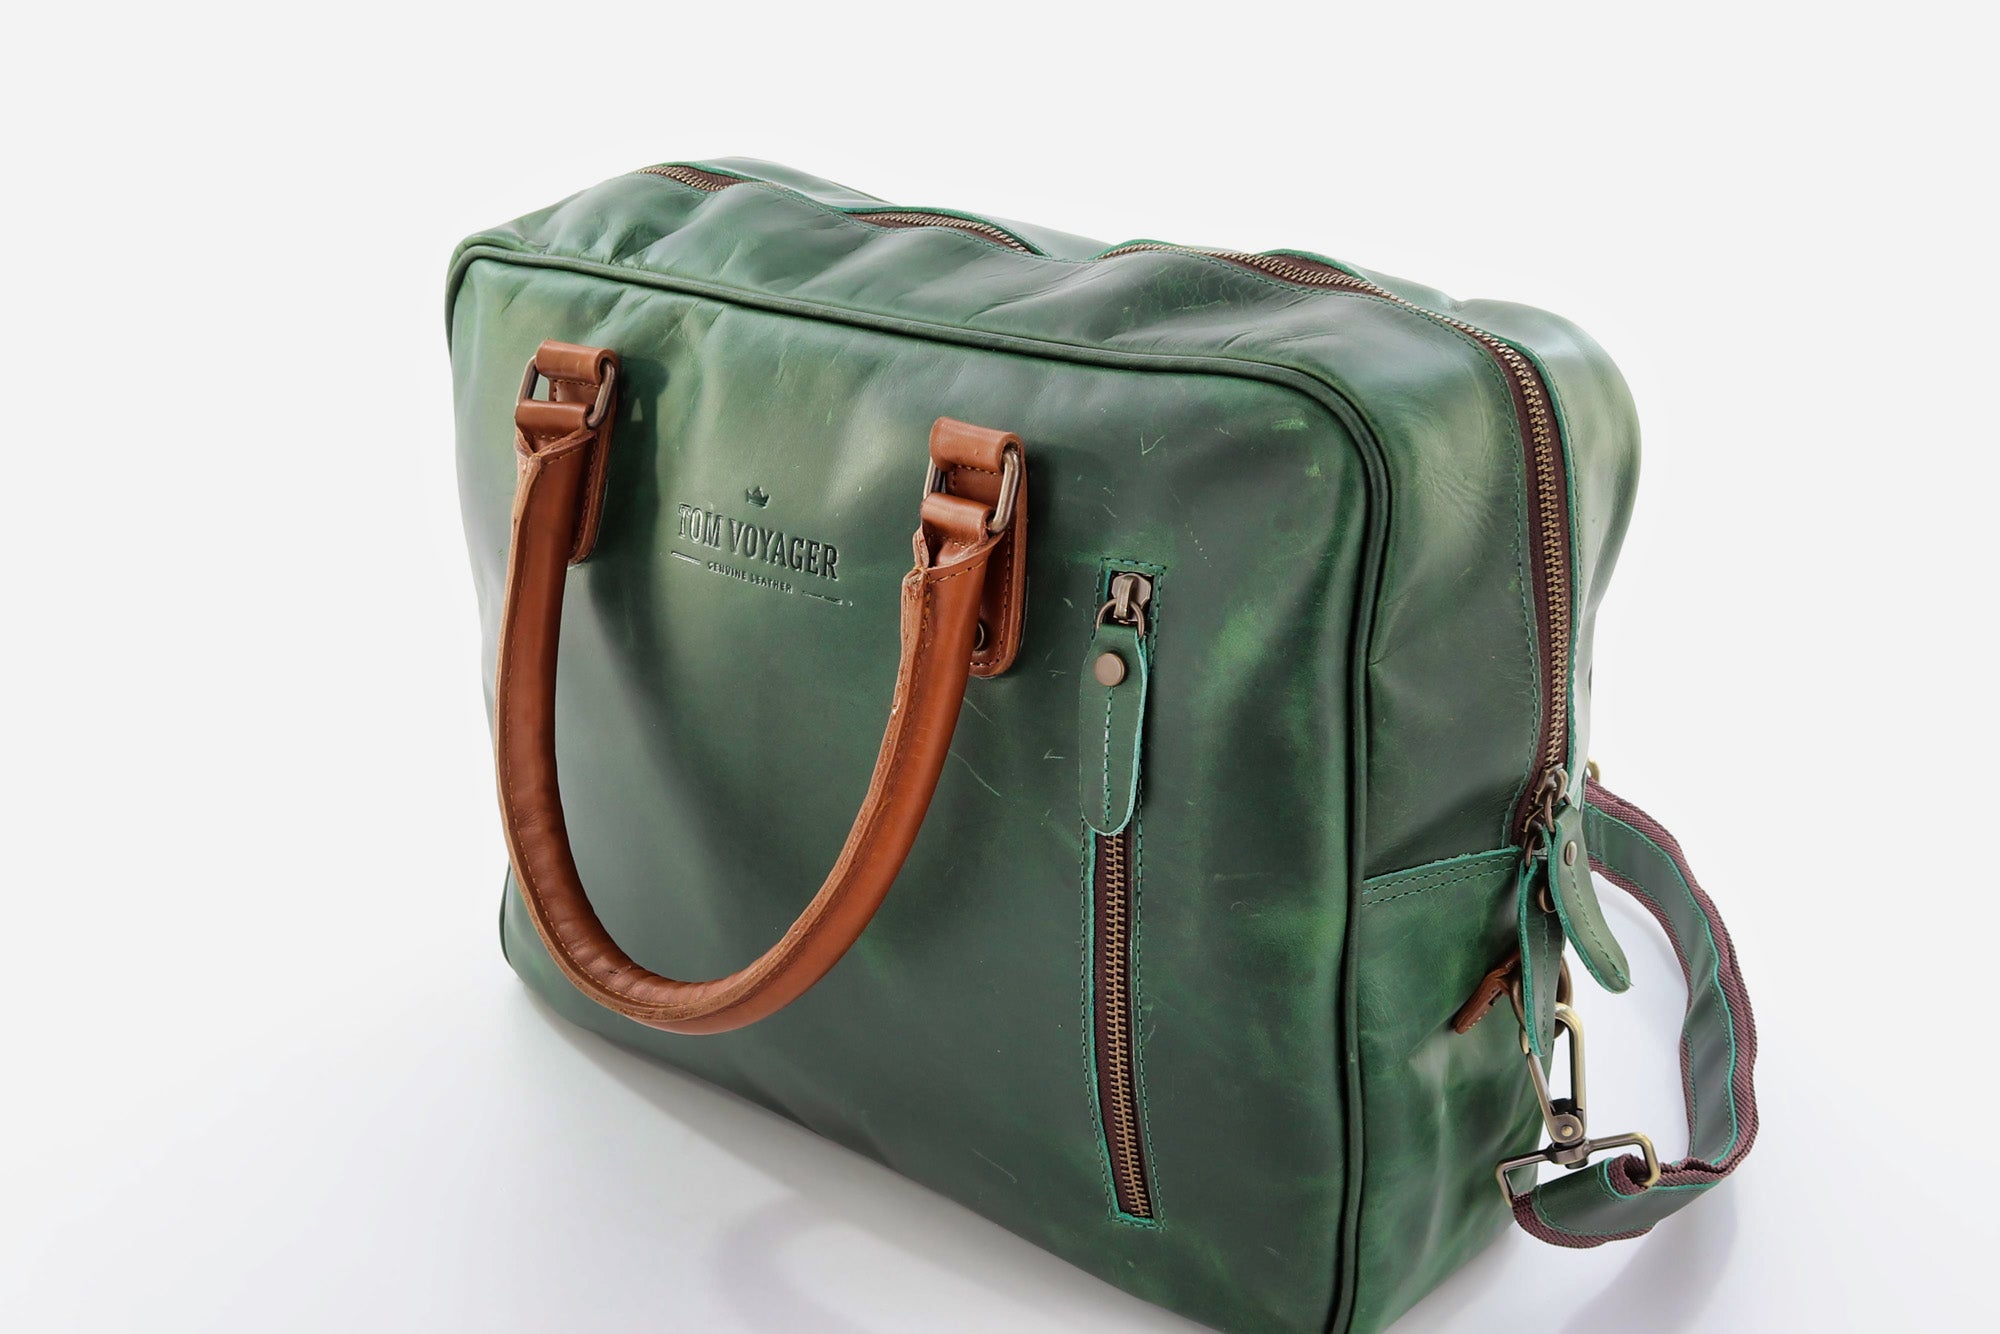 Emerald leather bag - genuine leather bag - messenger bag - emerald green - side view3